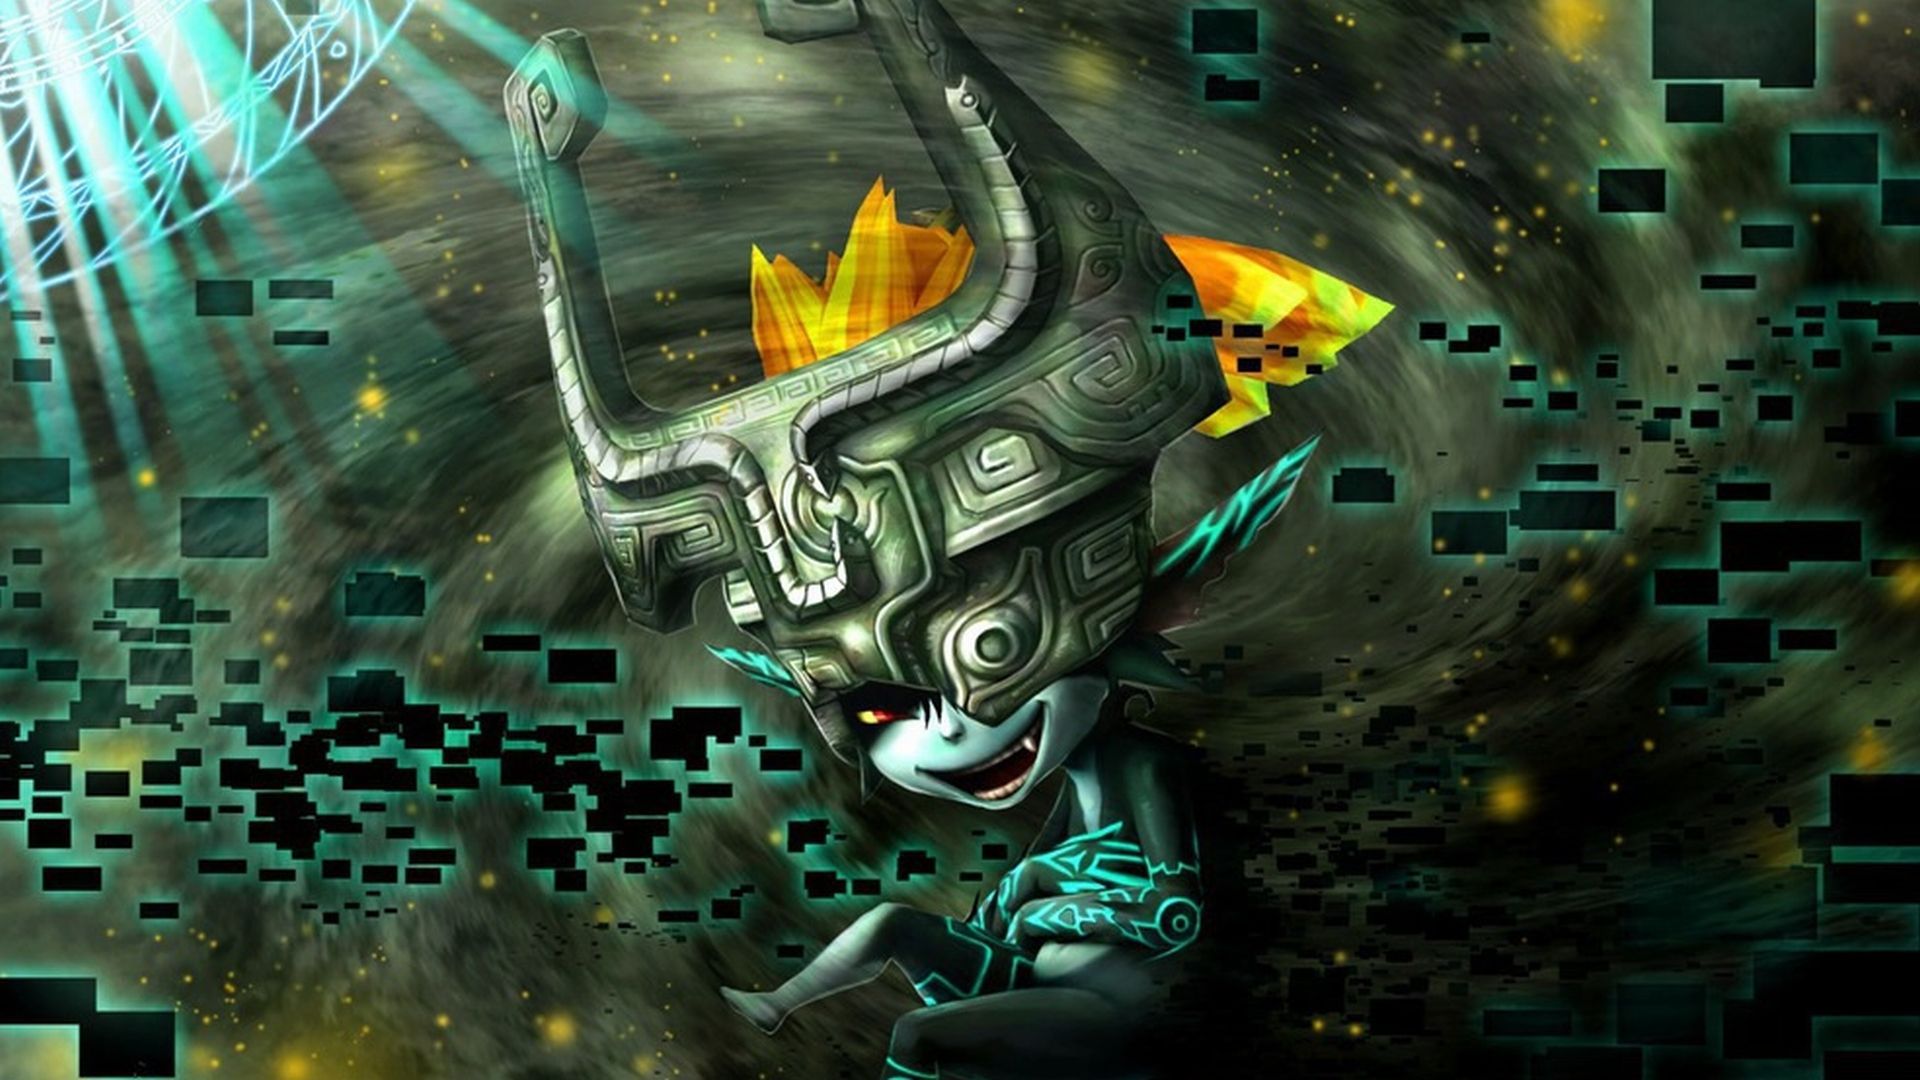 The Legend of Zelda Wallpaper HD Wallpapers, Backgrounds, Images